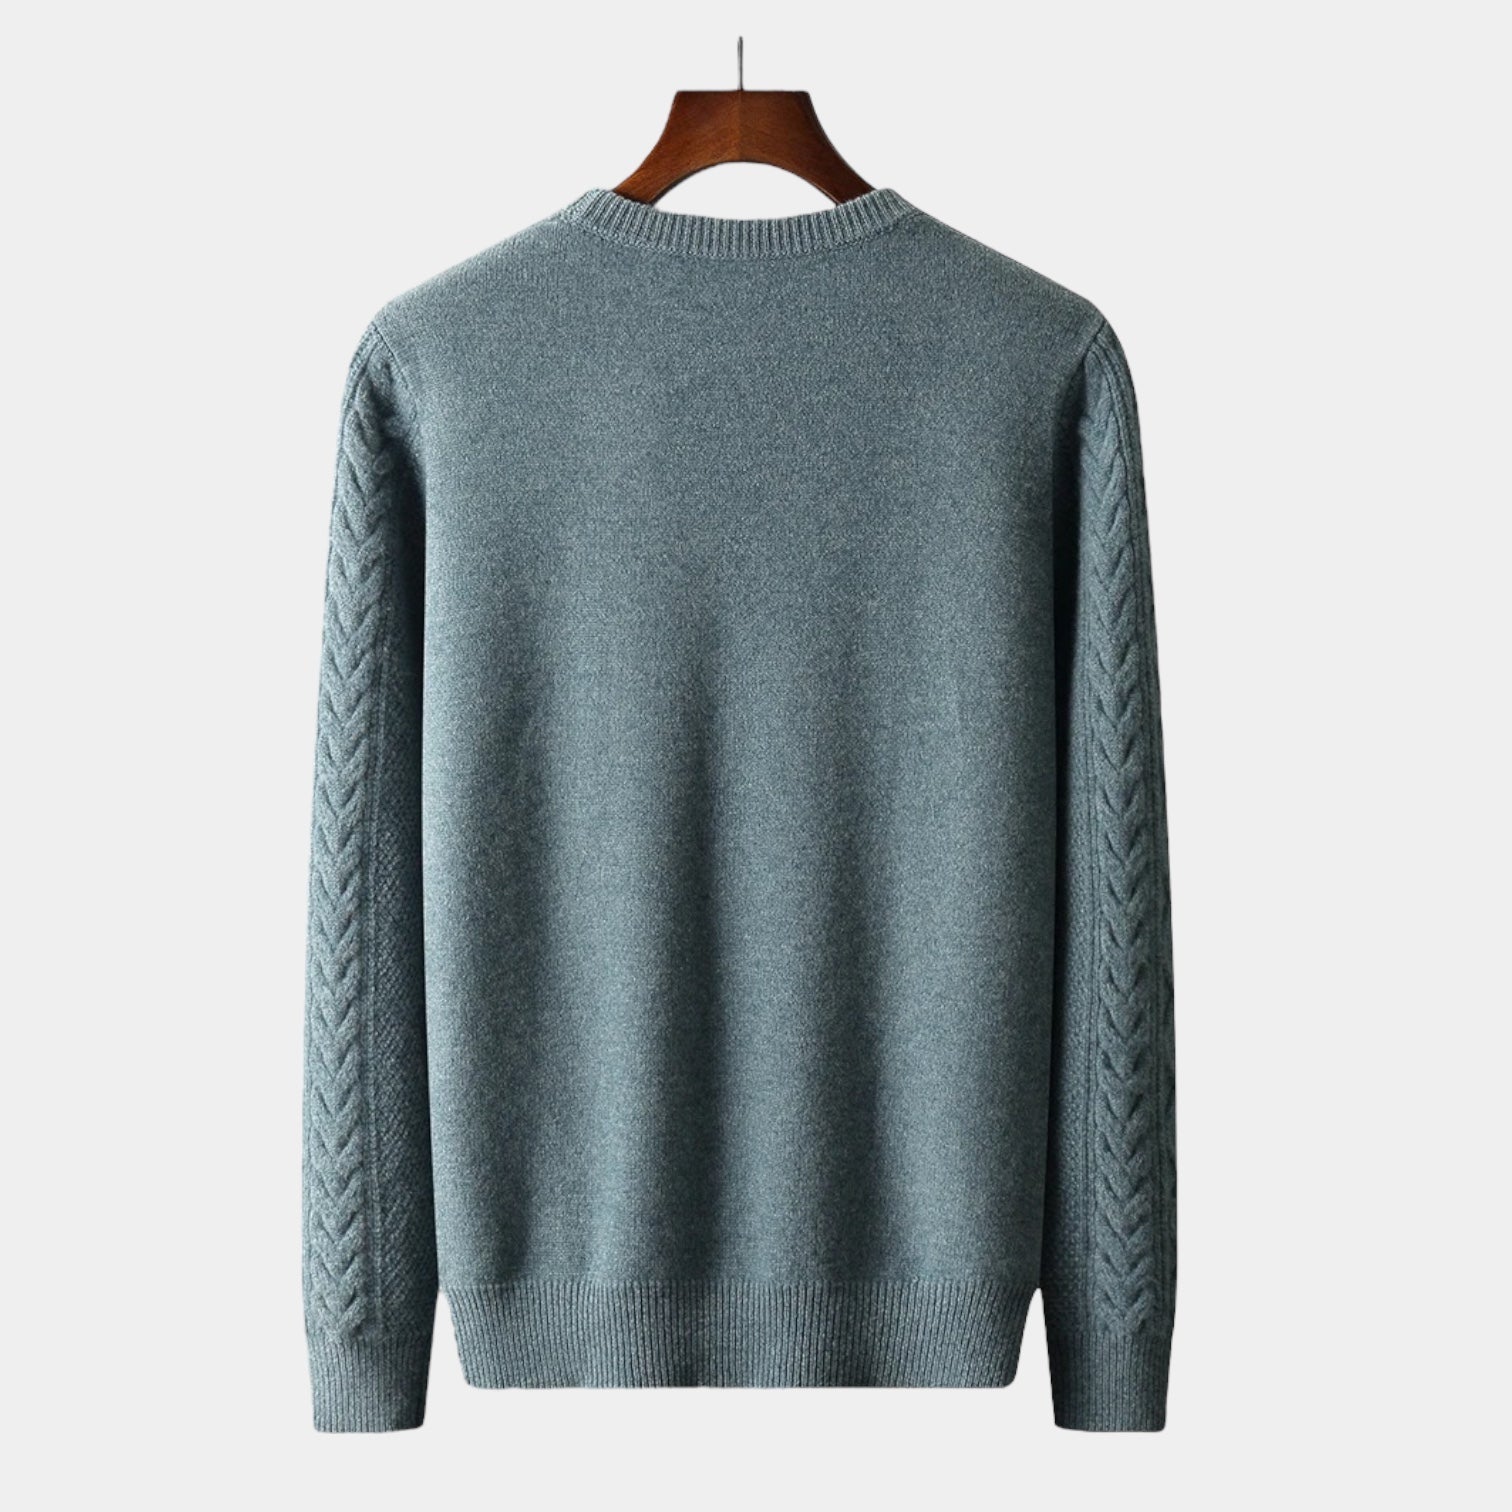 OLD MONEY Merino Wool Jacquard Sweater